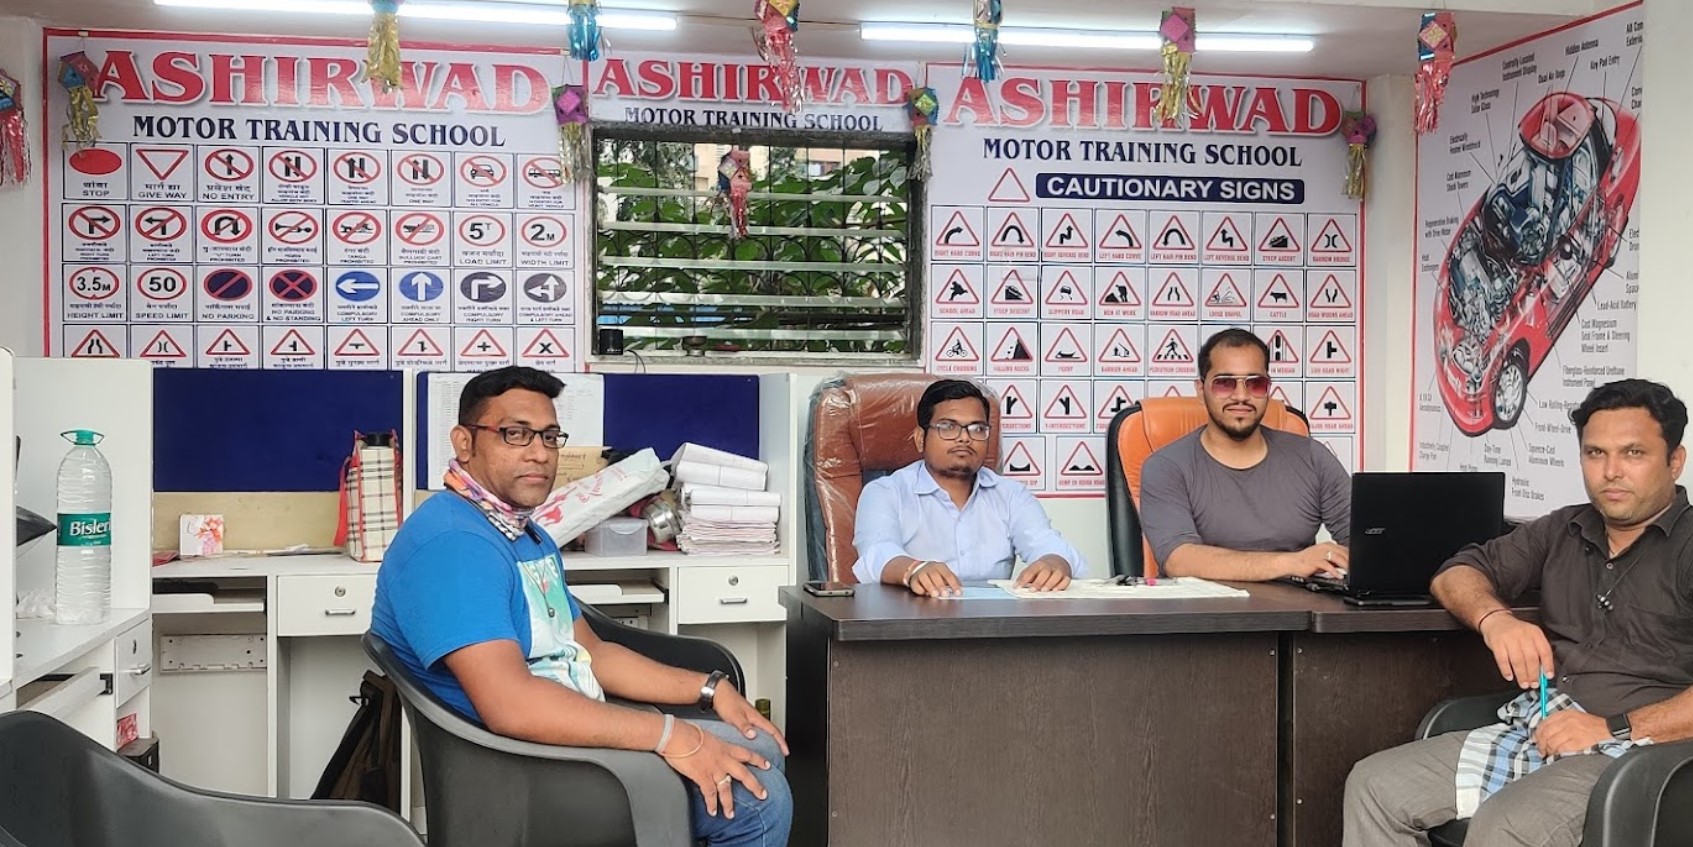 Ashirwad Motor Training School in Kandivali West